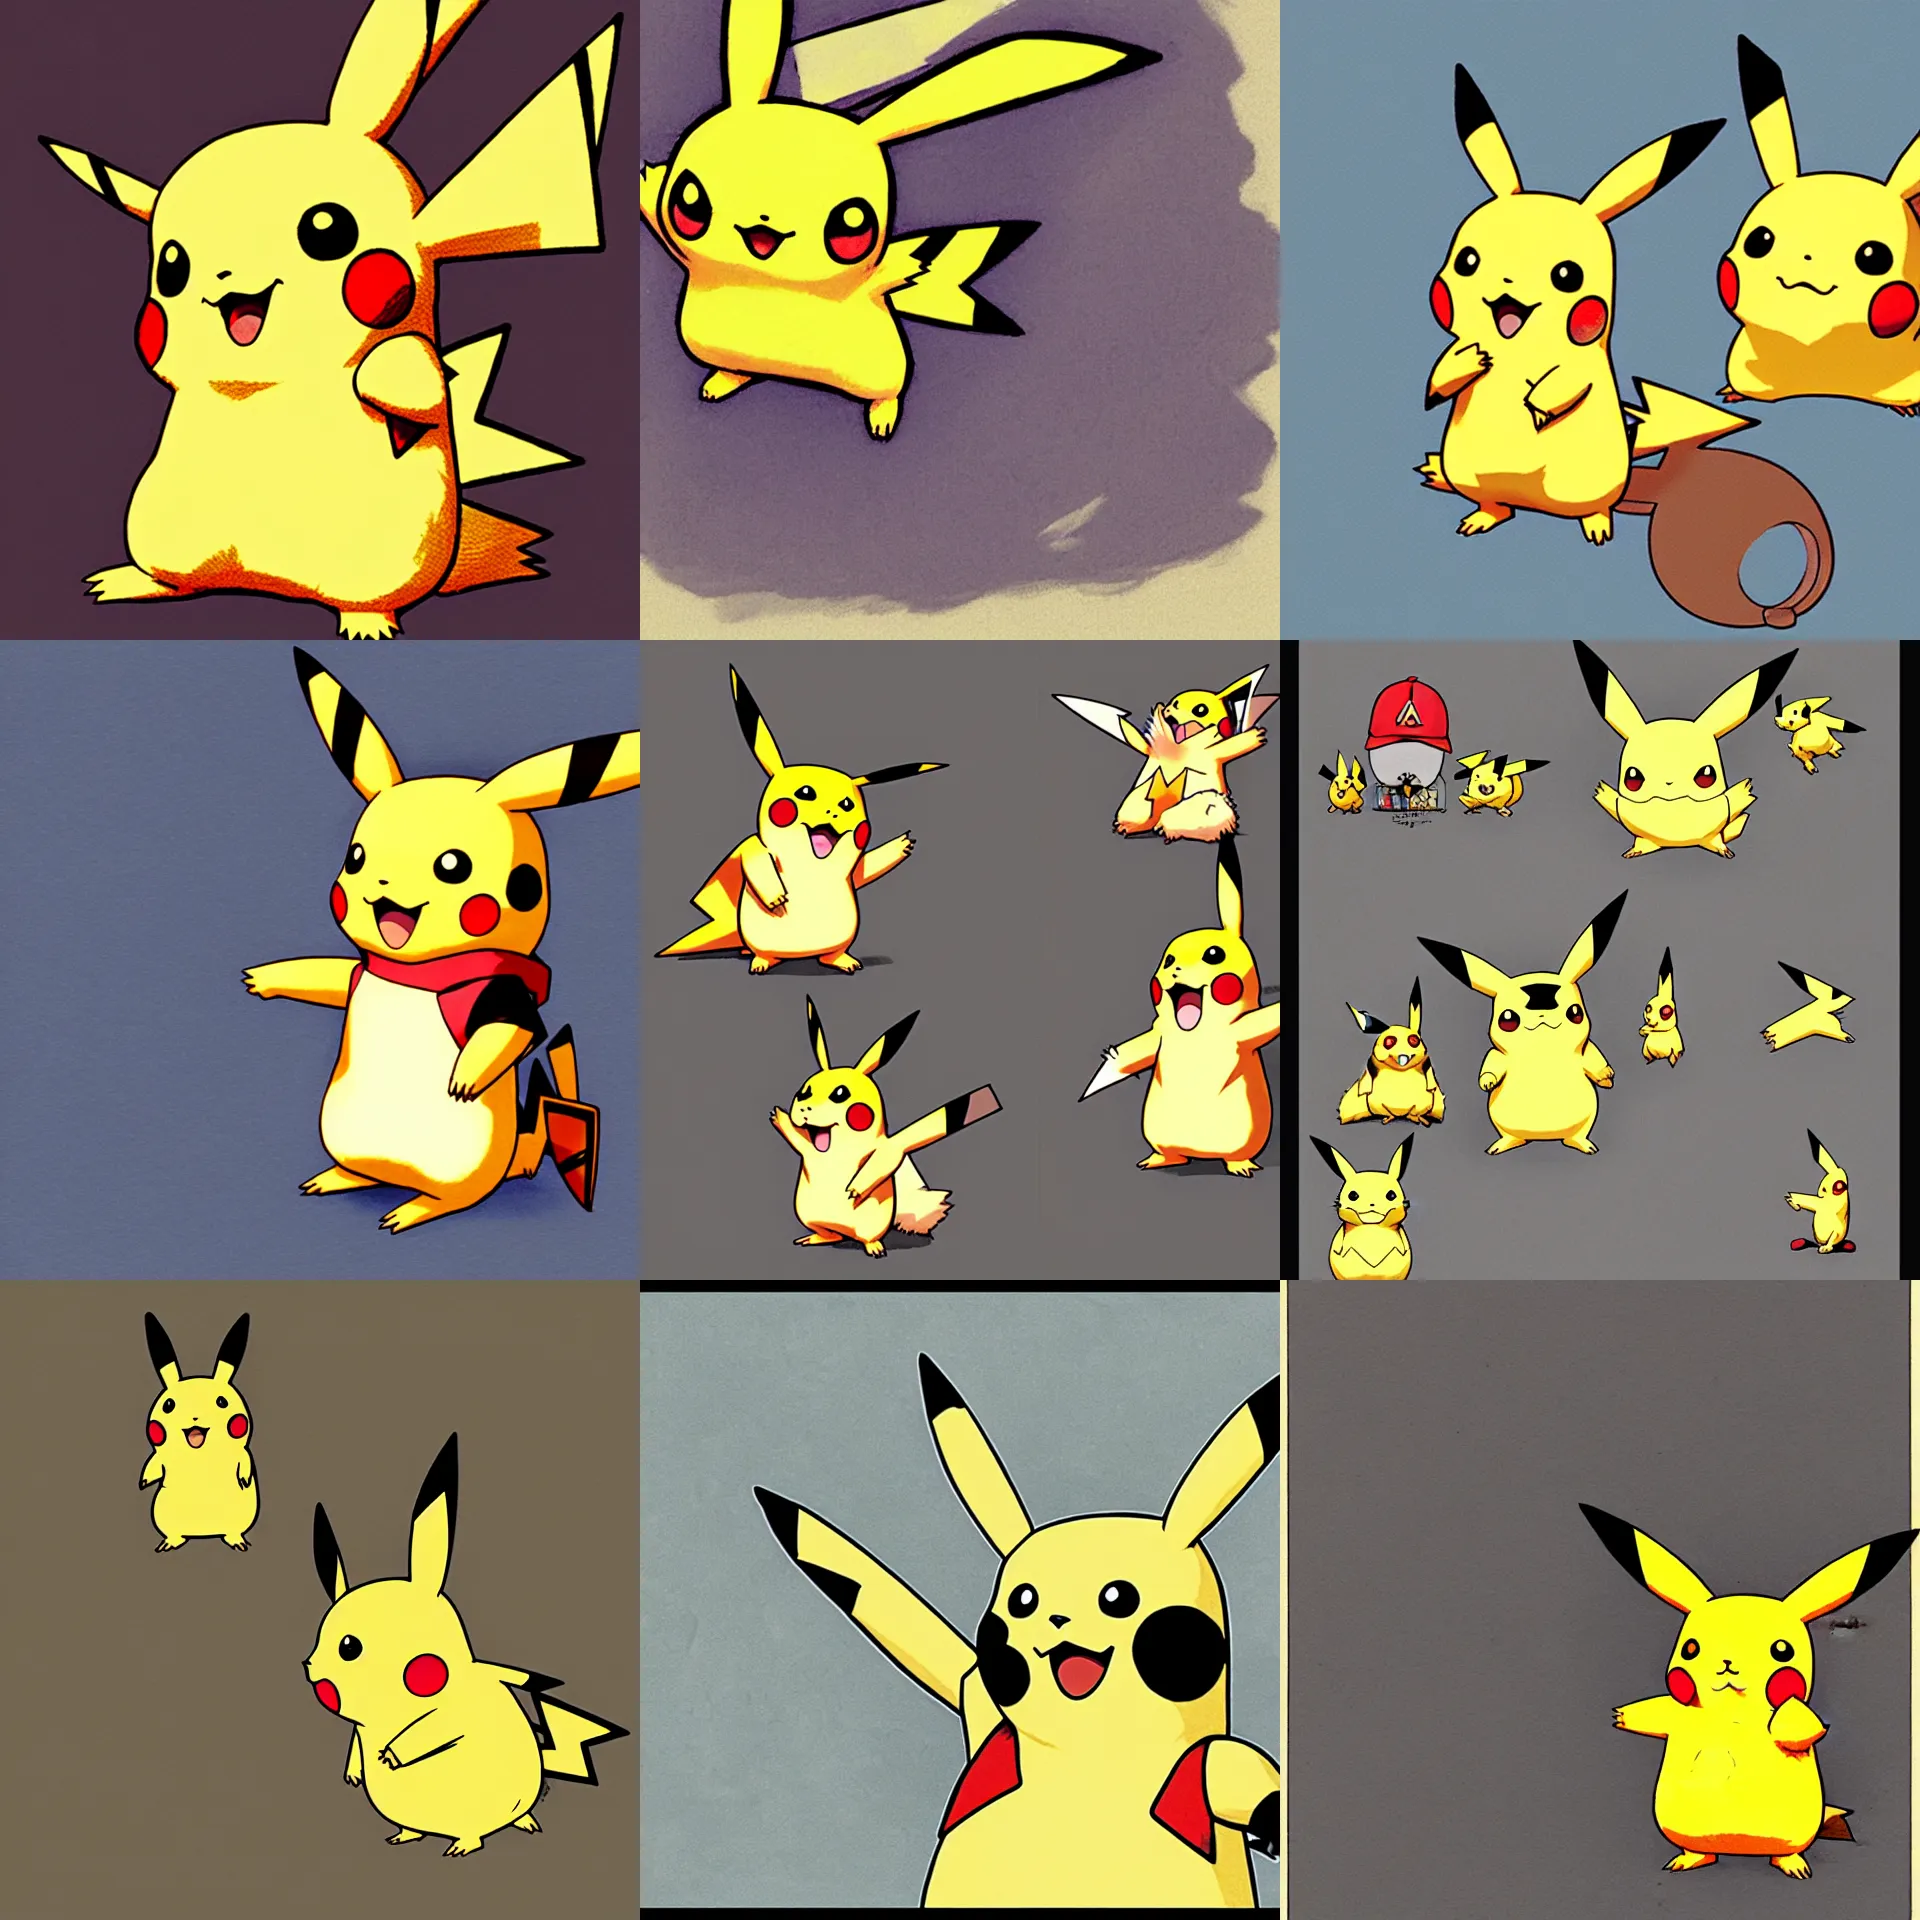 Prompt: Pikachu illustrated by Akihiko Yoshida, concept art